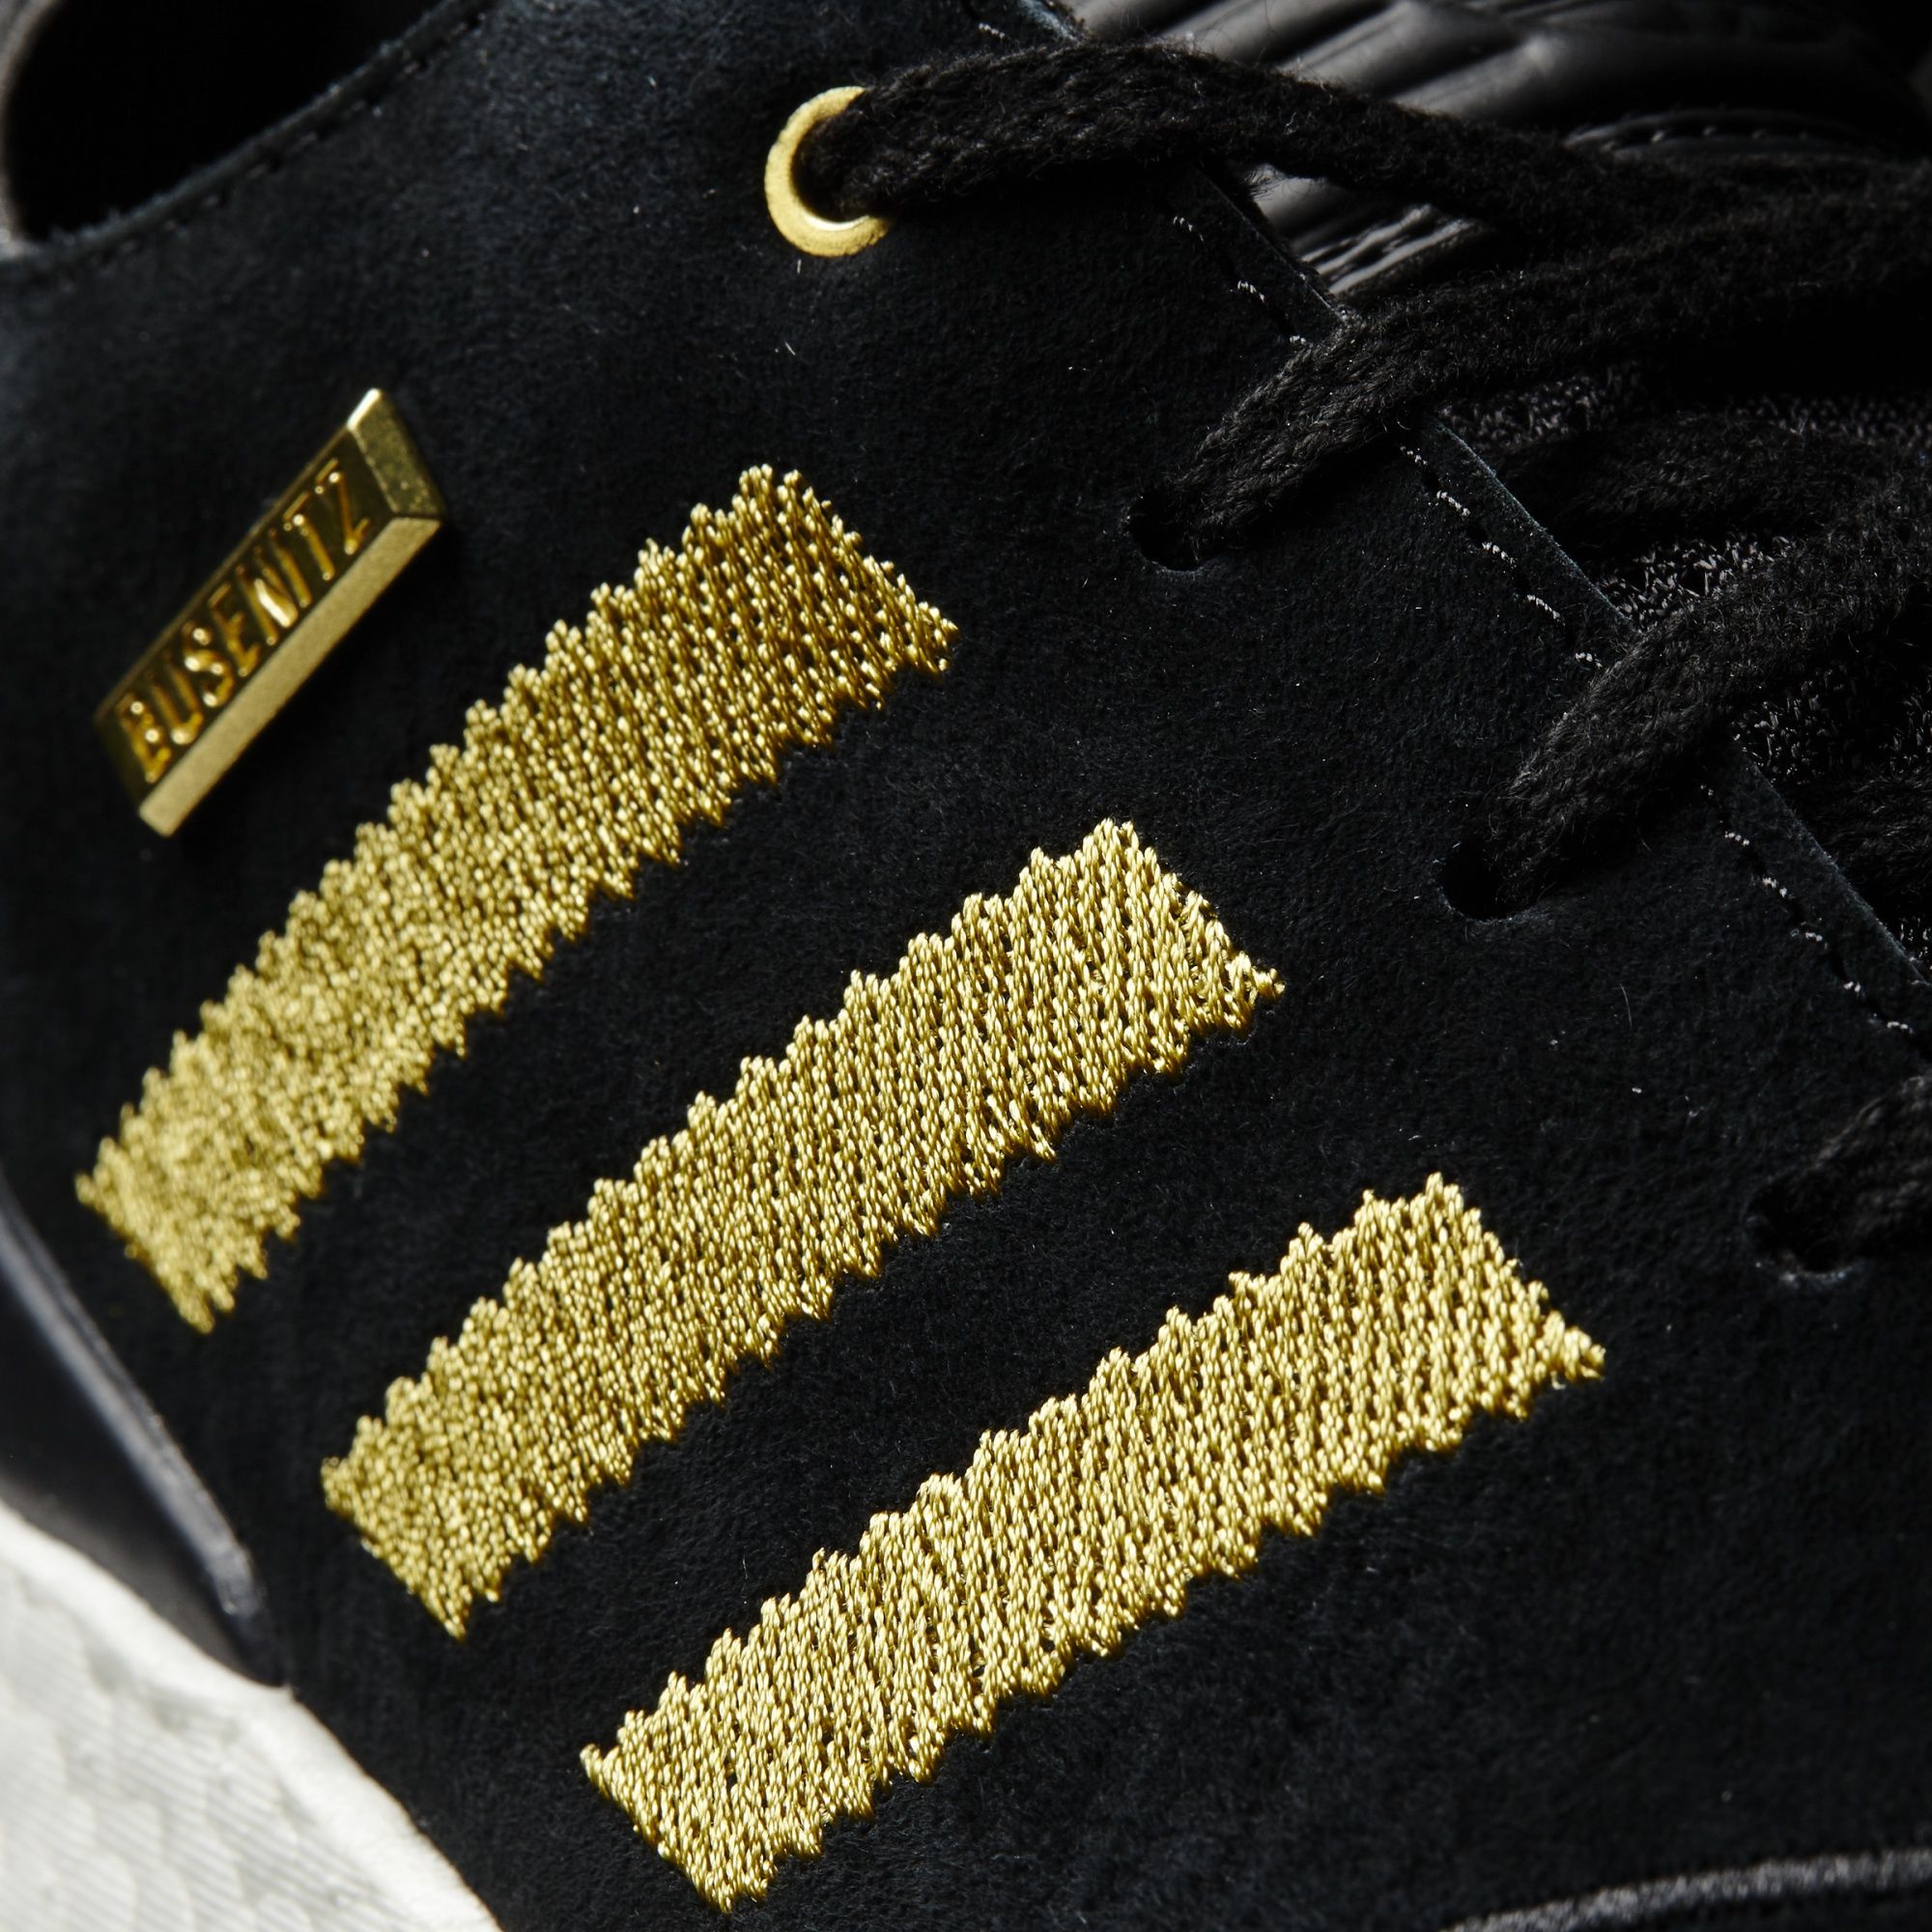 Adidas Busenitz 10 Year Anniversary Black Gold Detail